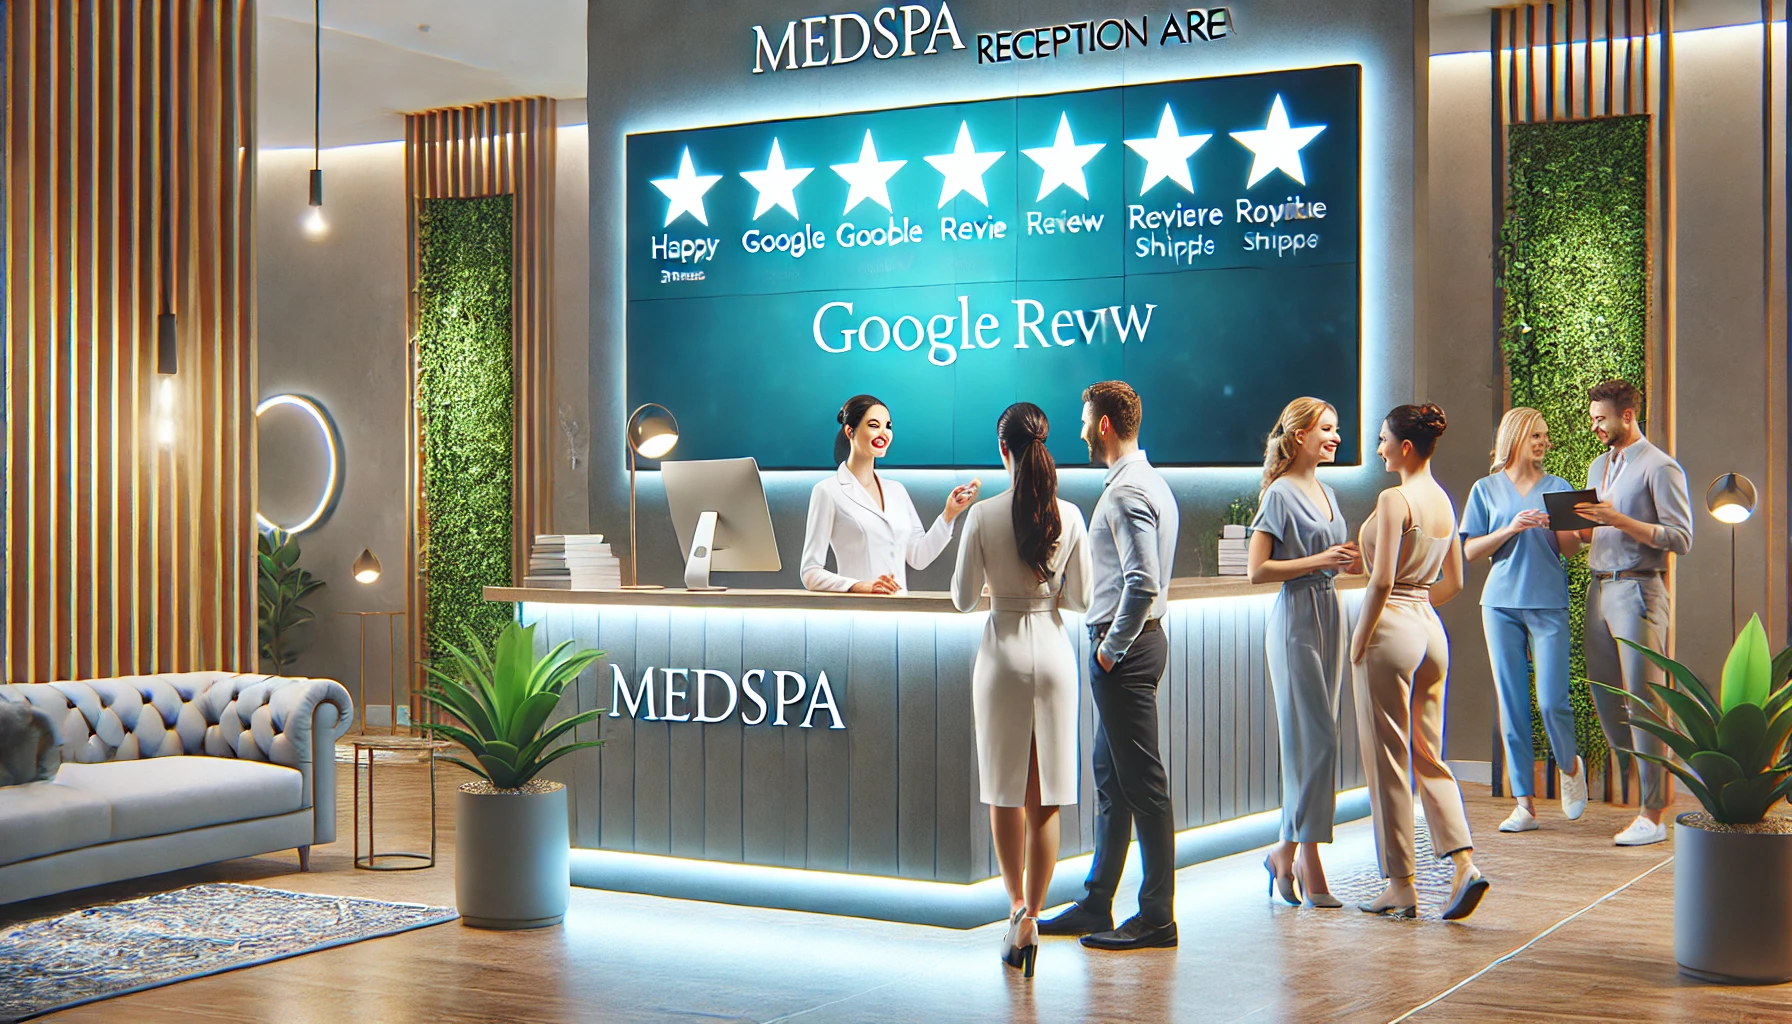 Acquiring Google Reviews for Your MedSpa